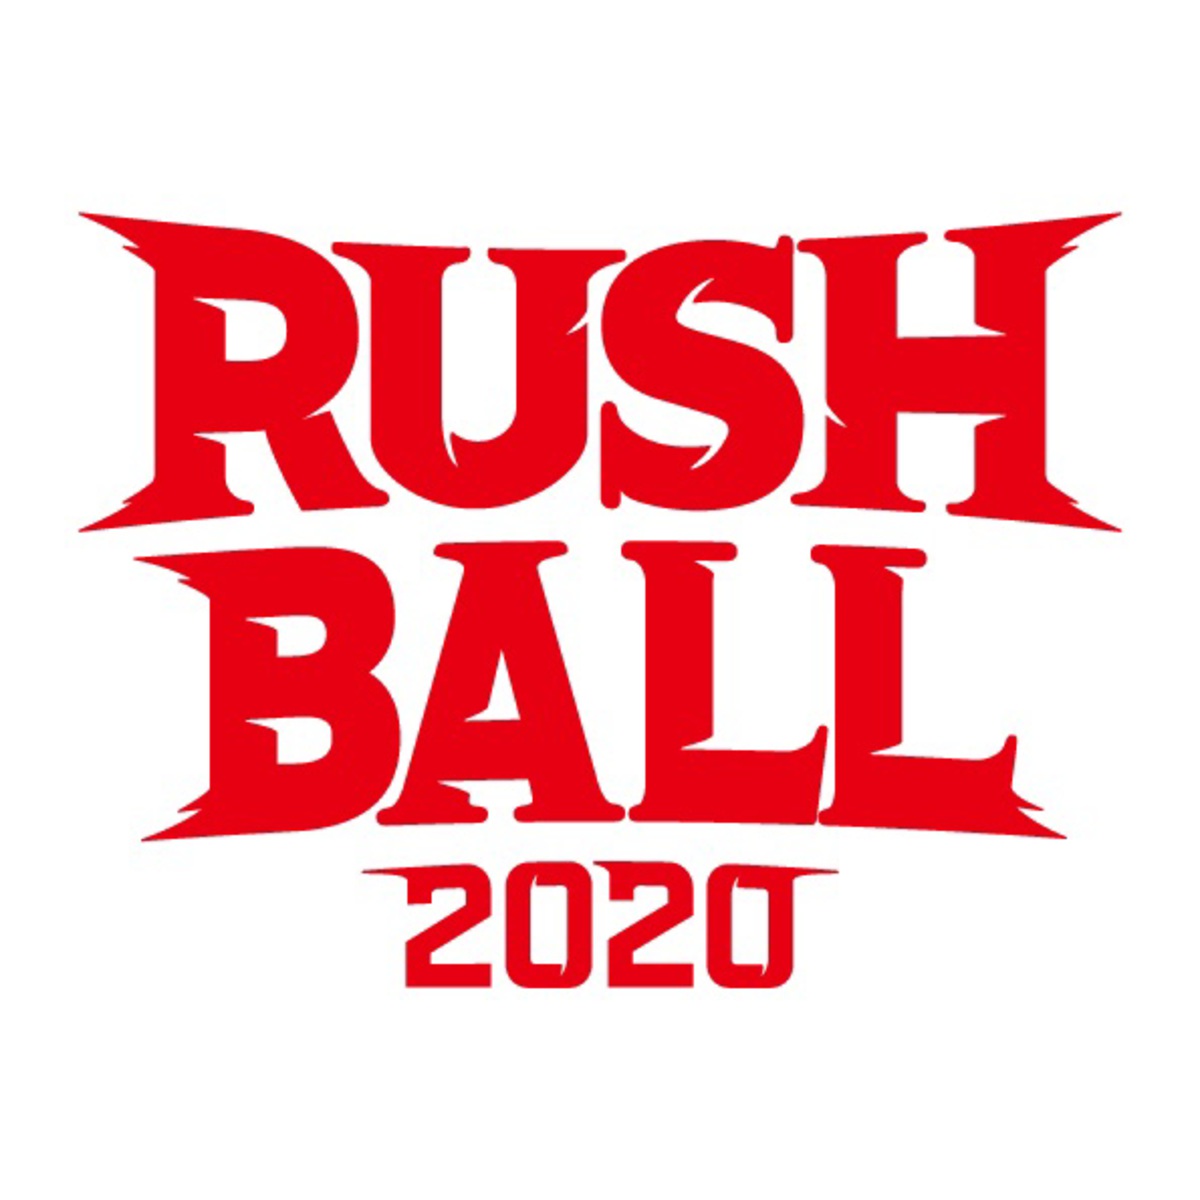 Rush Ball 2020 出演アーティストに Alexandros クリープ Kana Boon Monoeyes オーラル キュウソ シネマ Creepy Nuts Dragon Ashら決定